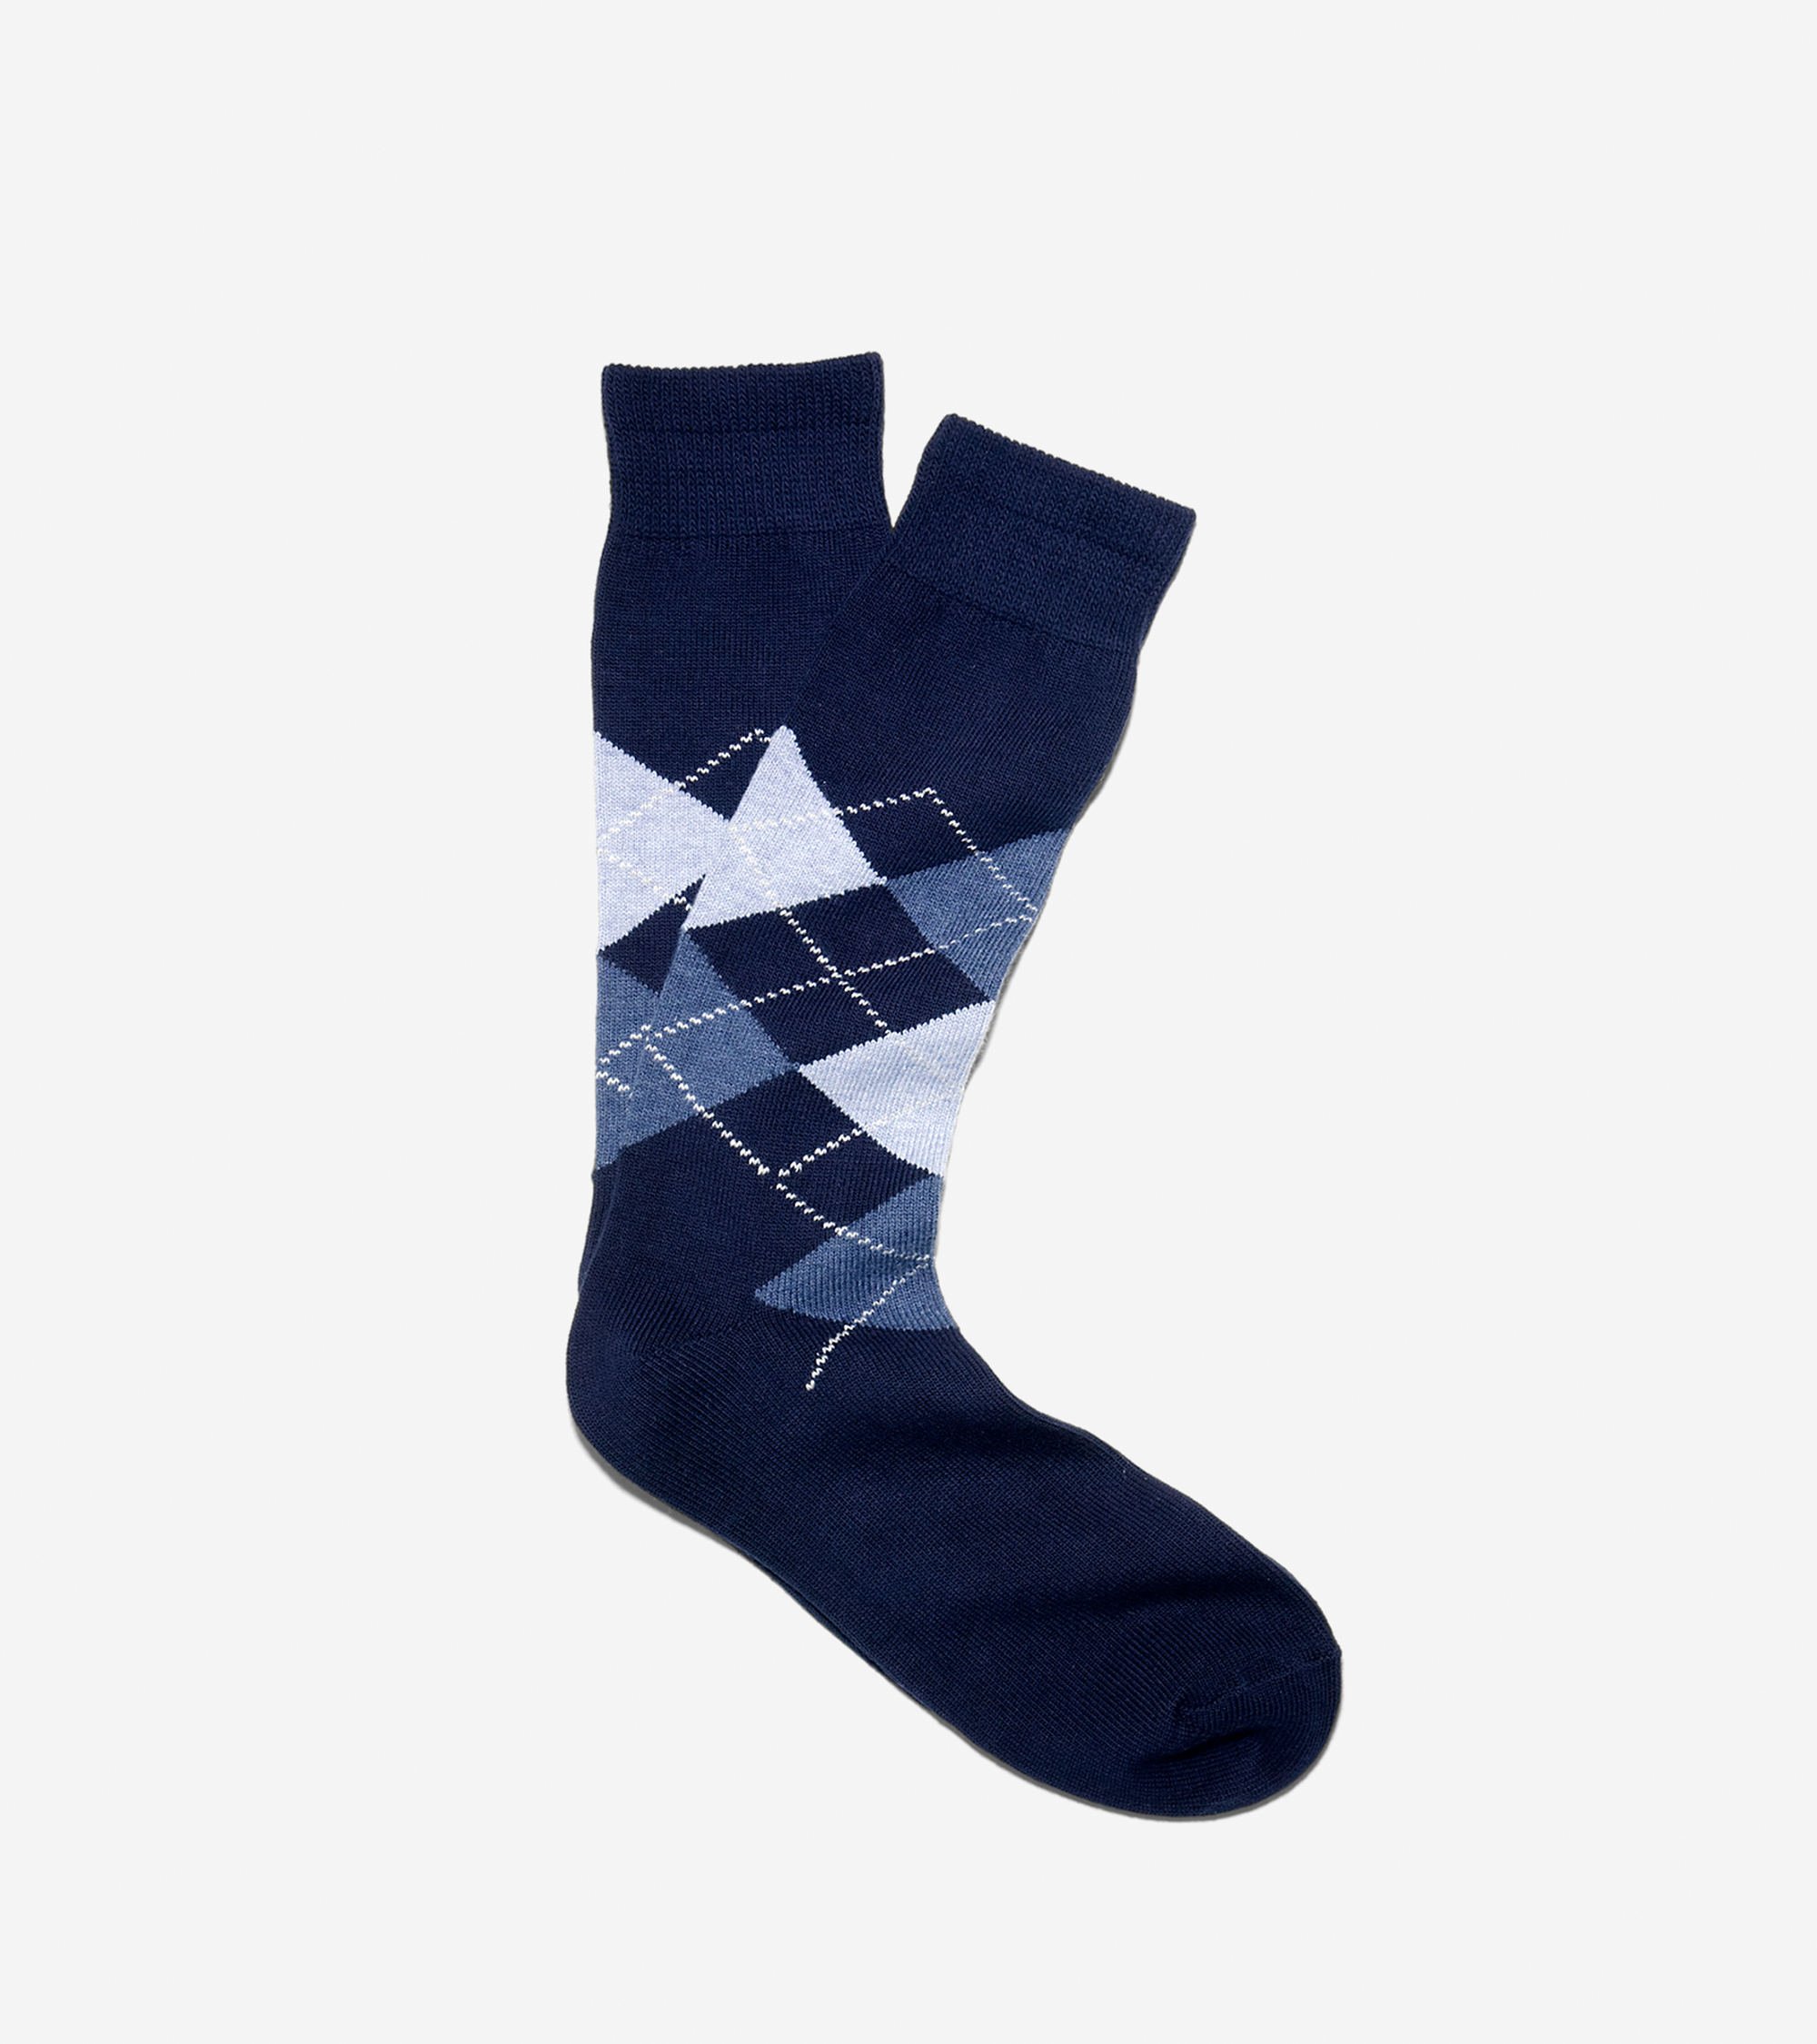 Lyst - Cole Haan Wide Argyle Socks in Blue for Men